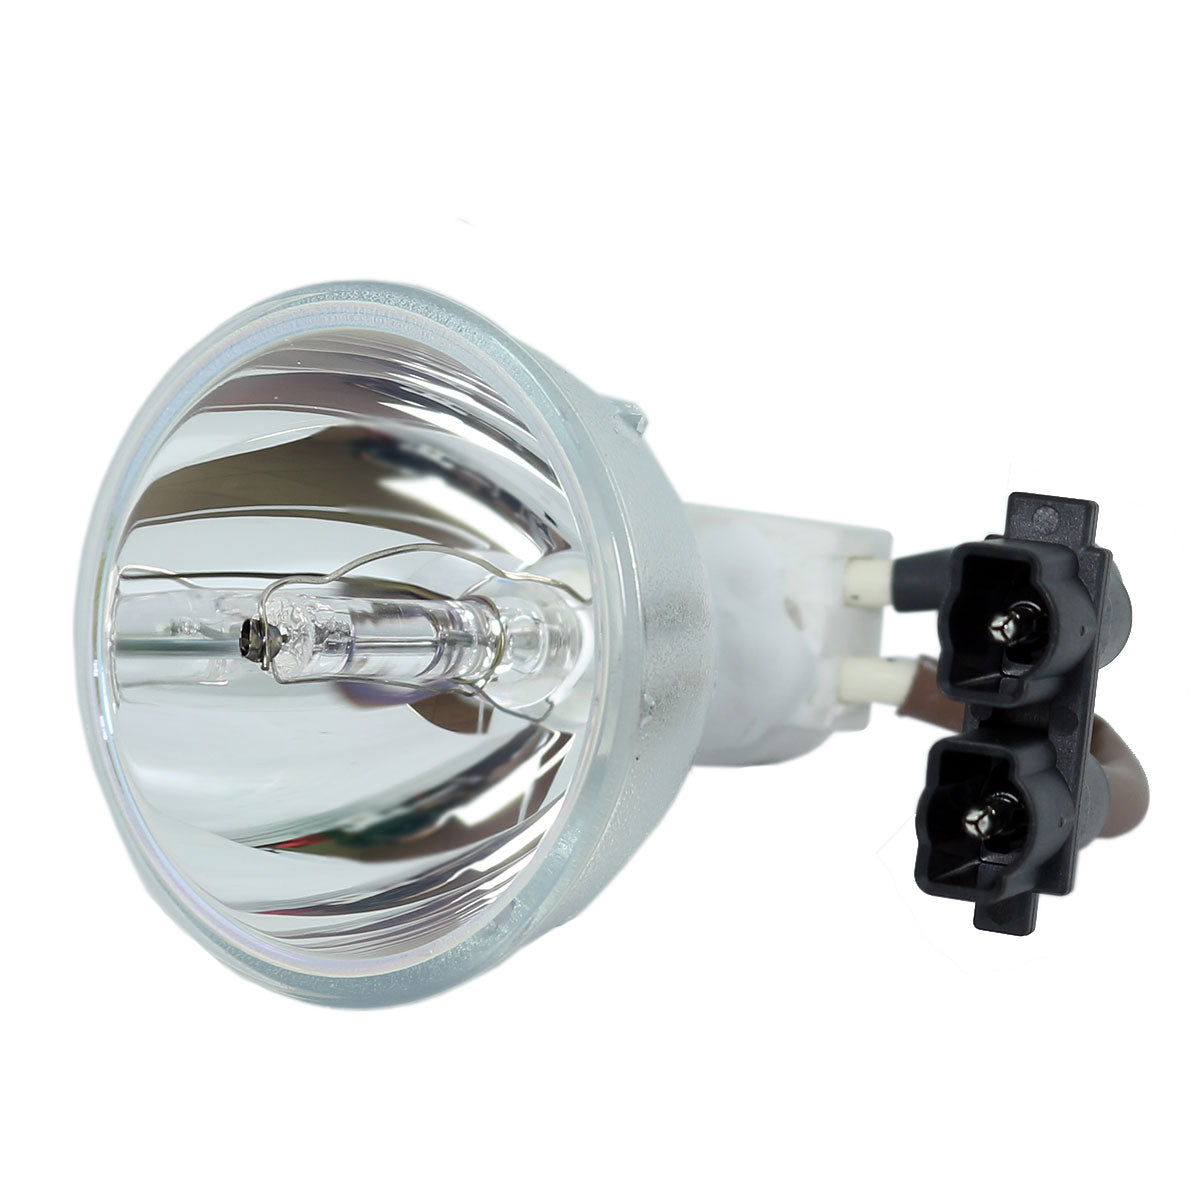 Geha 60-201608 Phoenix Projector Bare Lamp